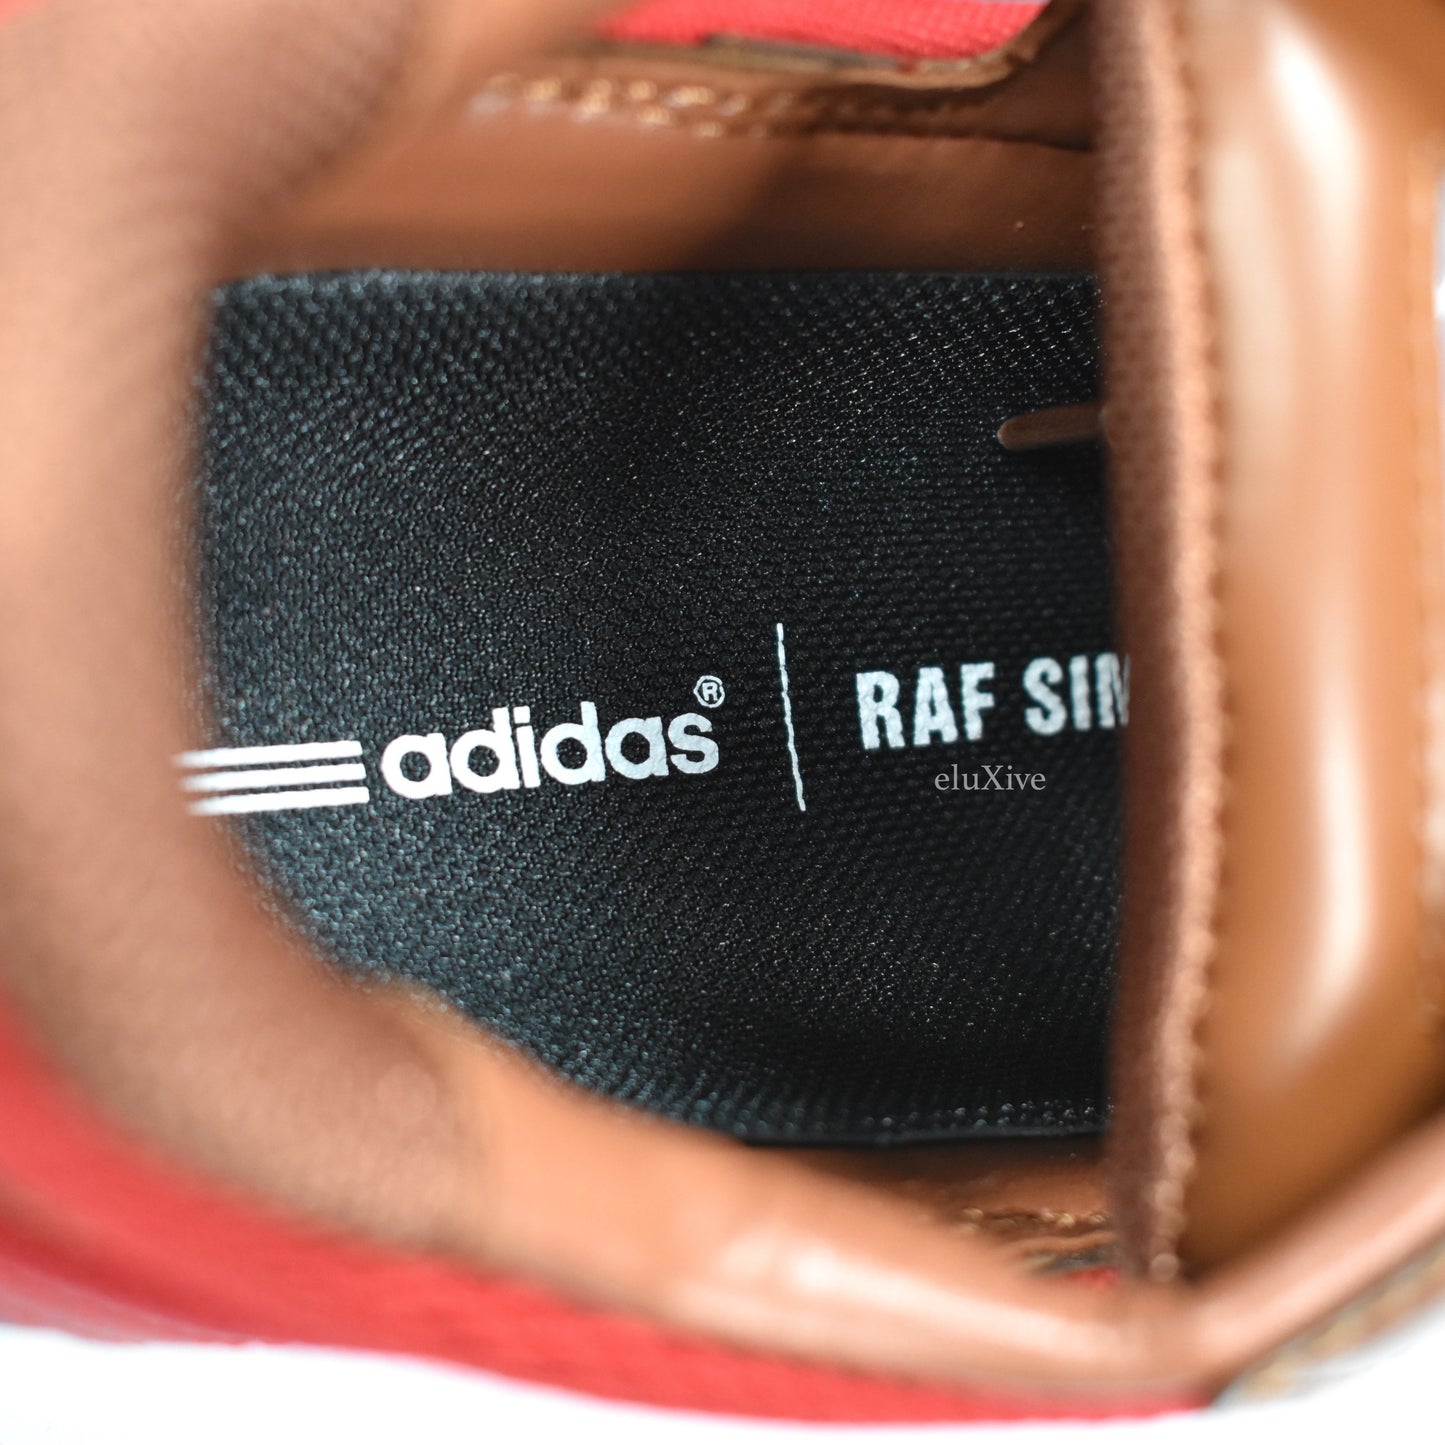 Adidas x Raf Simons - RS Ozweego 'Replicant' (Red)